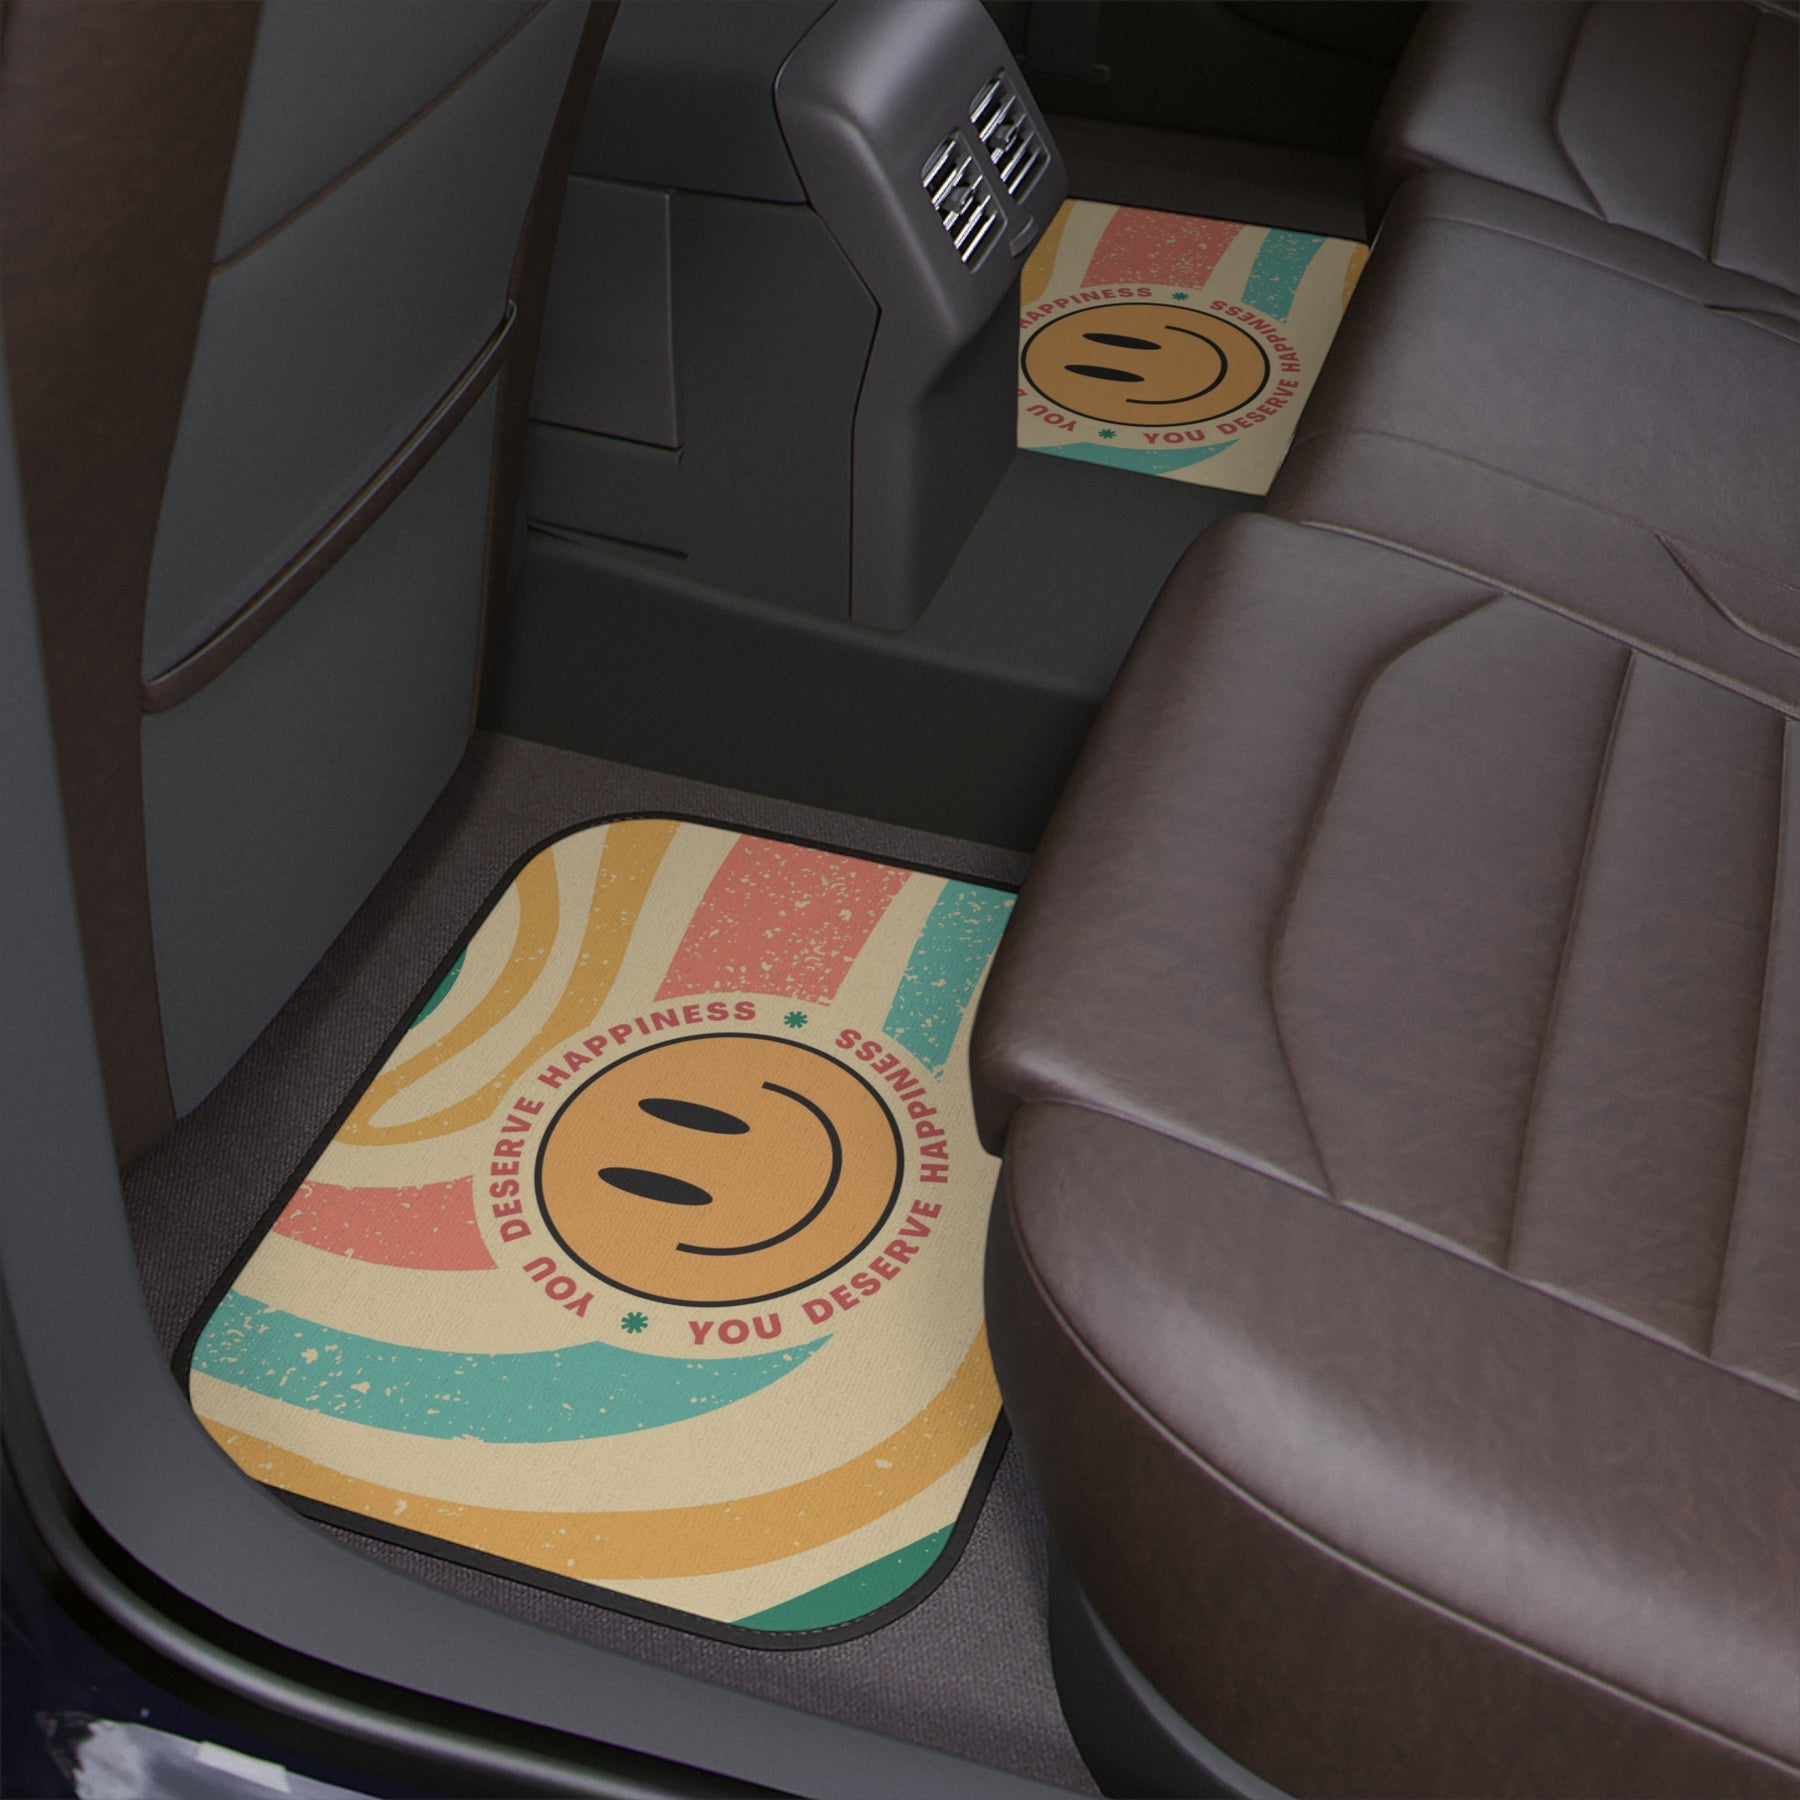 Boho Car Floor Mat,Aesthetic Retro Car Floor Mat,Cute Y2K Car Accessories,Girly Car accessories,cute interior car decor,funky hippie car mat